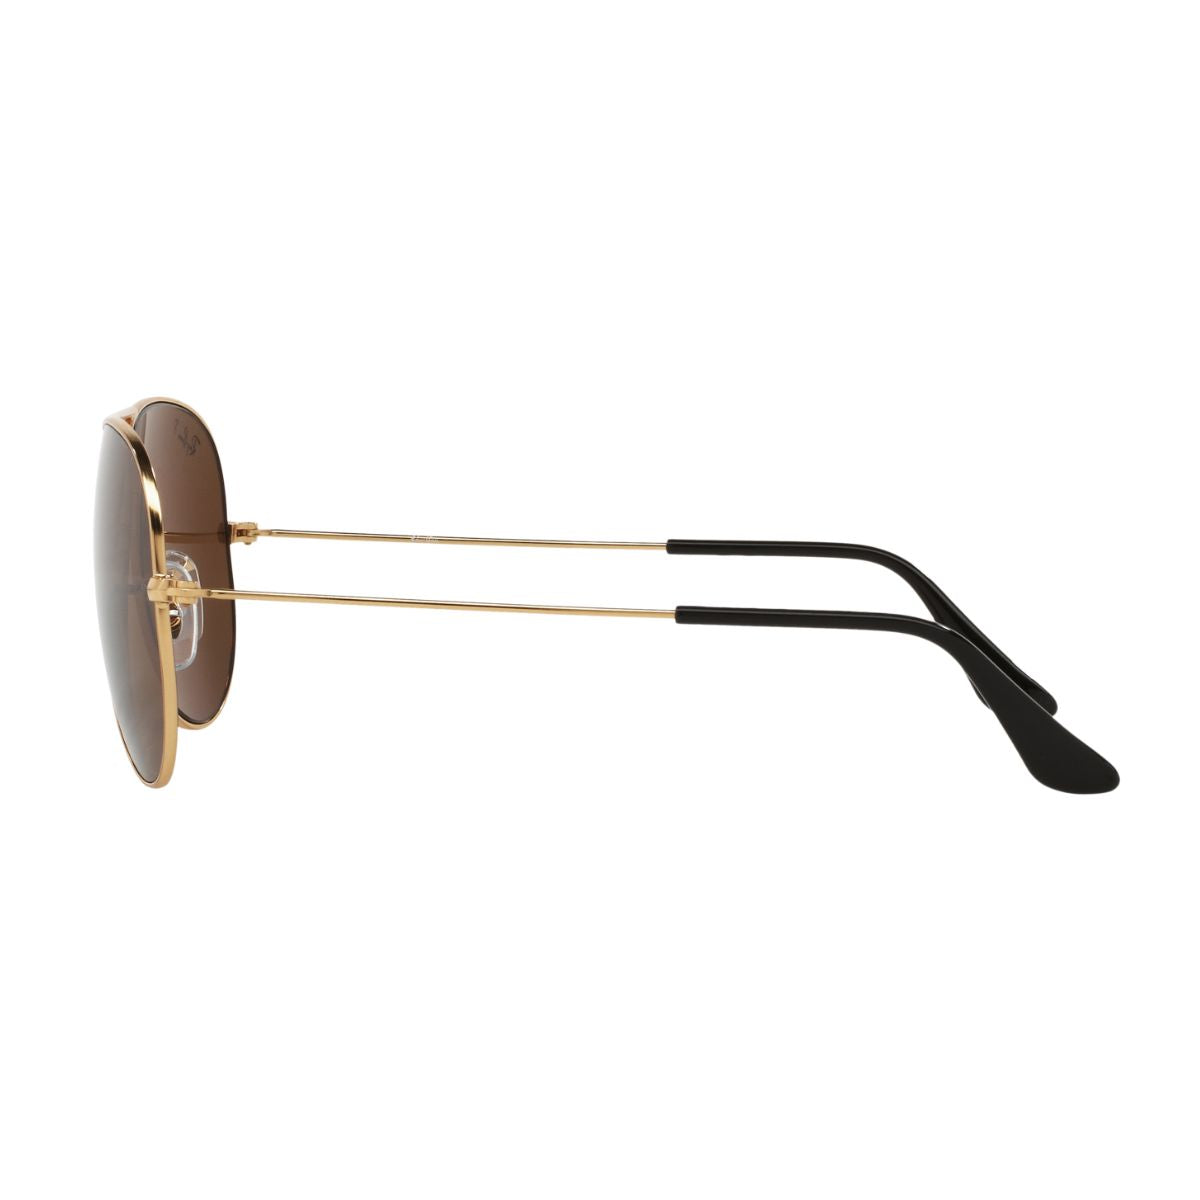 "Buy Ray Ban 3025 001/57 Polarized Eyewear Sunglass For Men And Women At Optorium"